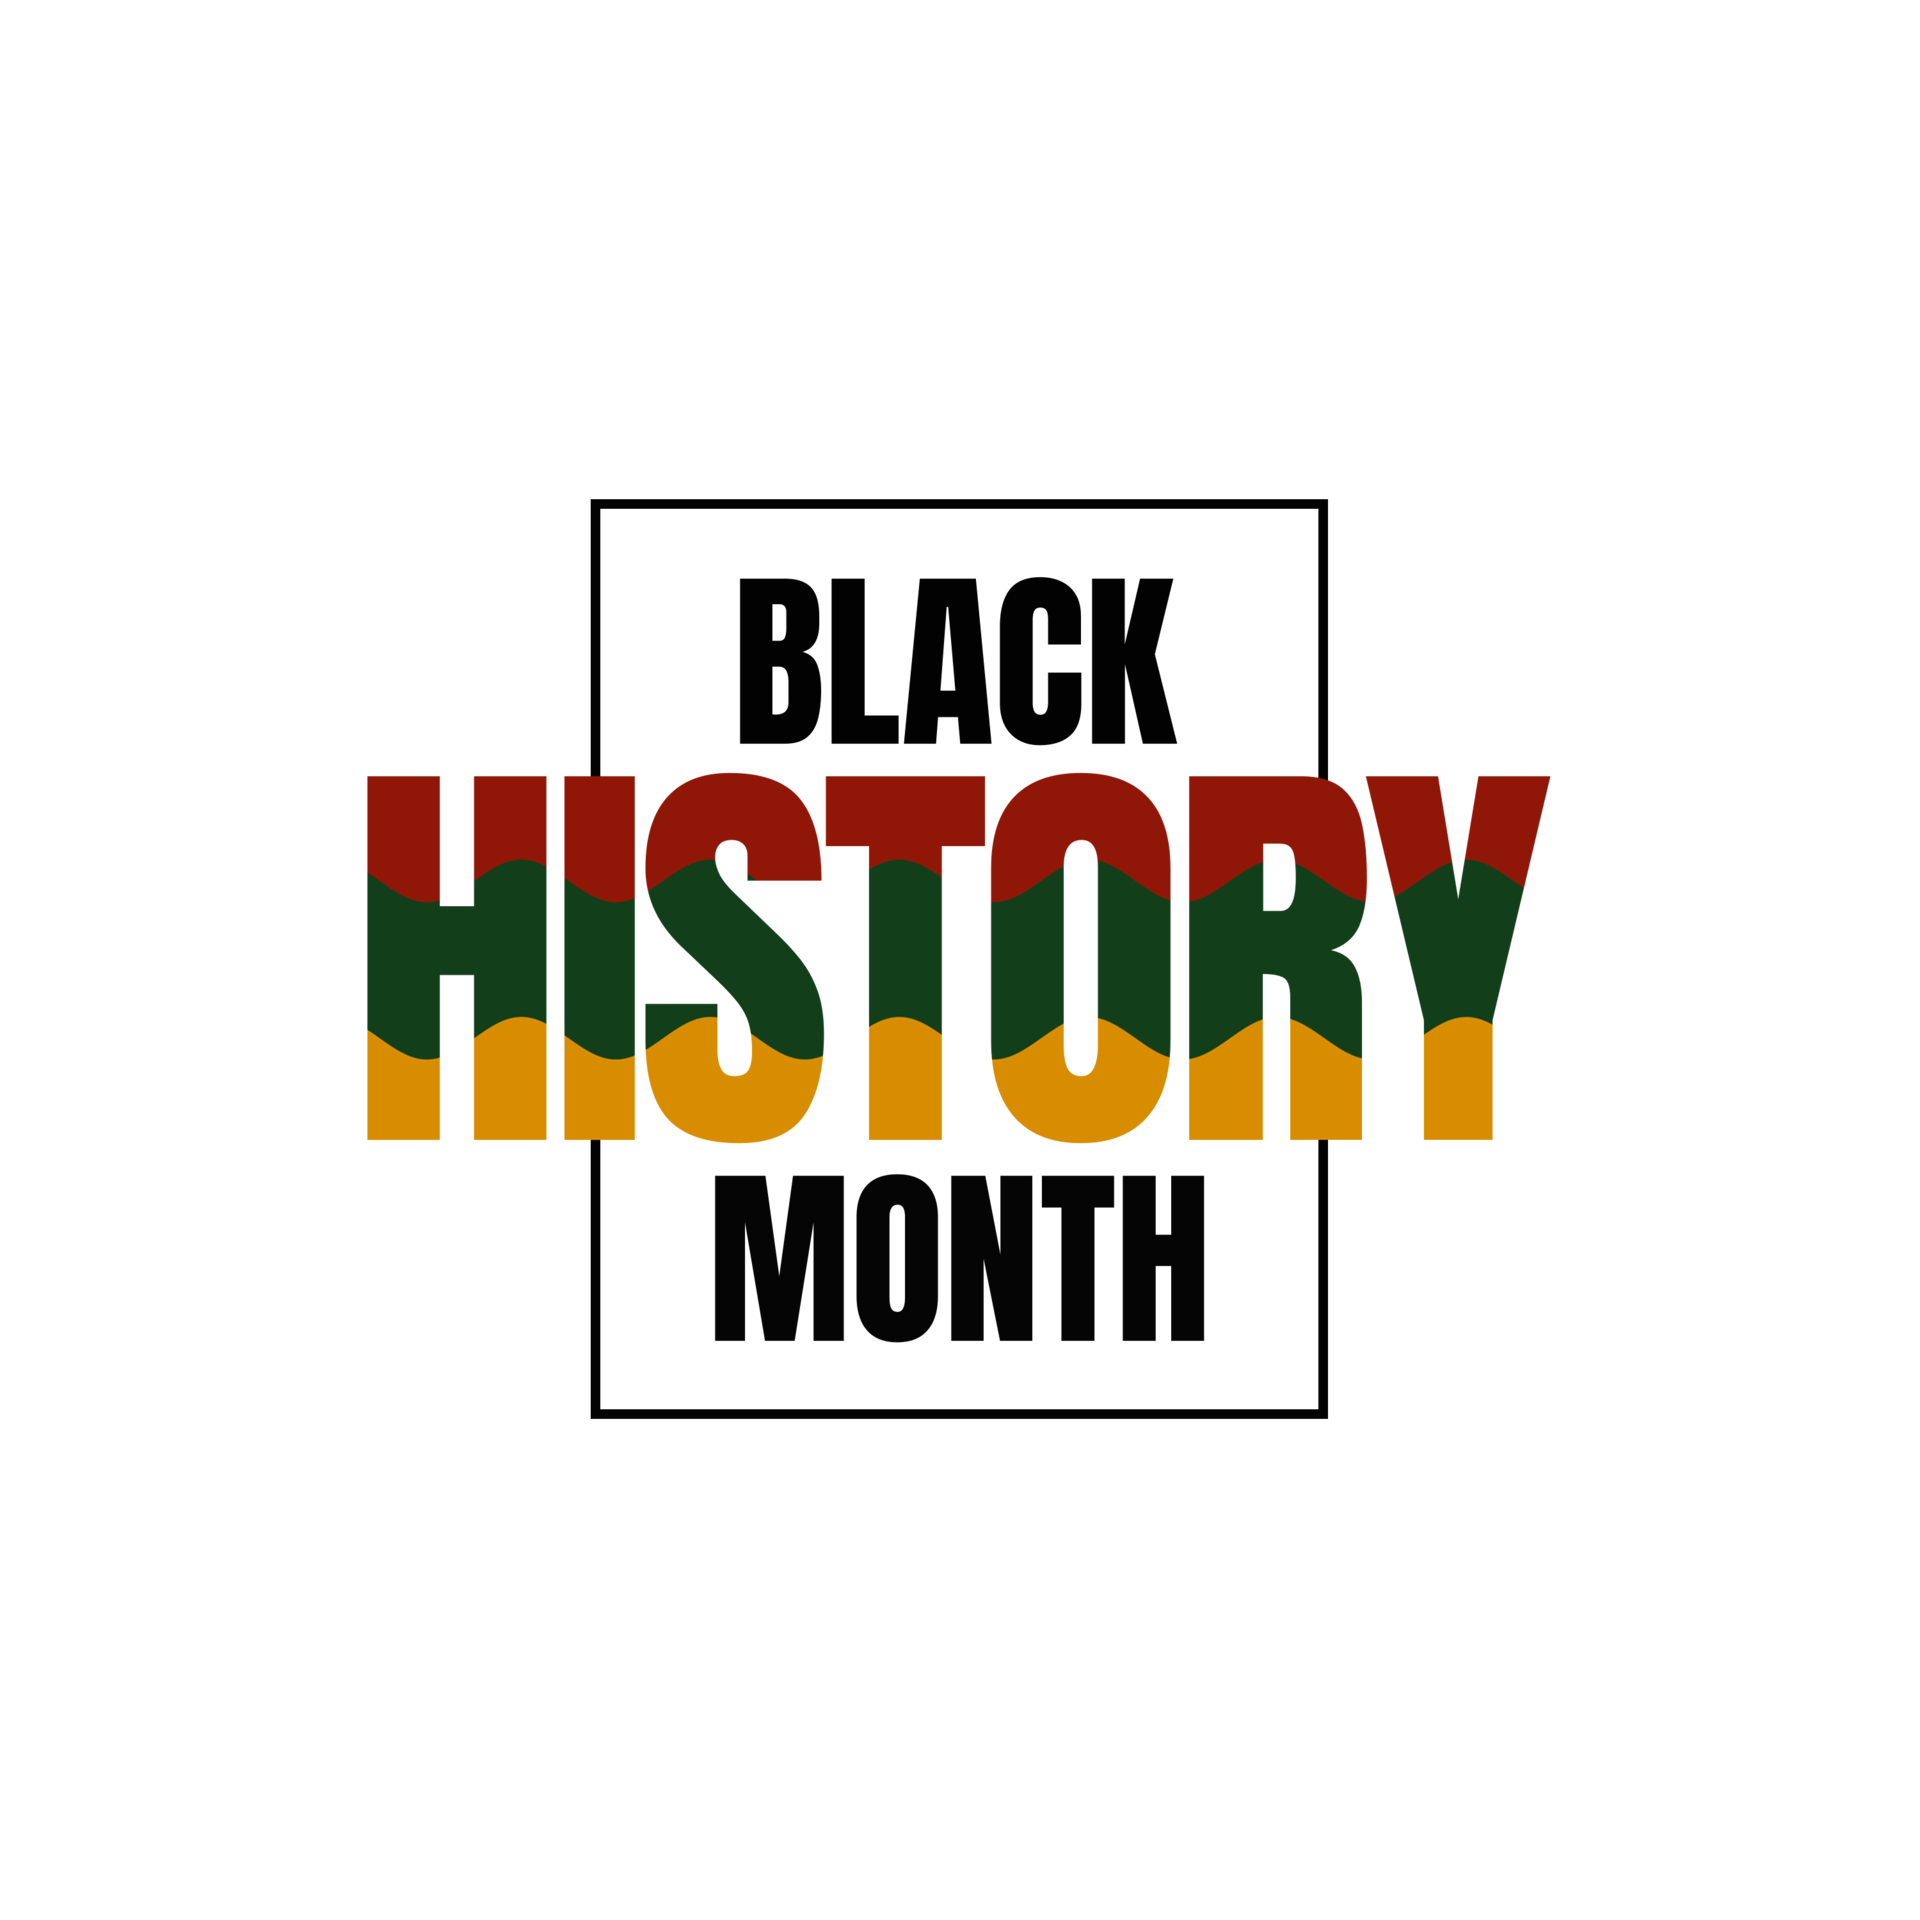 free-black-history-month-celebrate-design-black-history-month-15699124